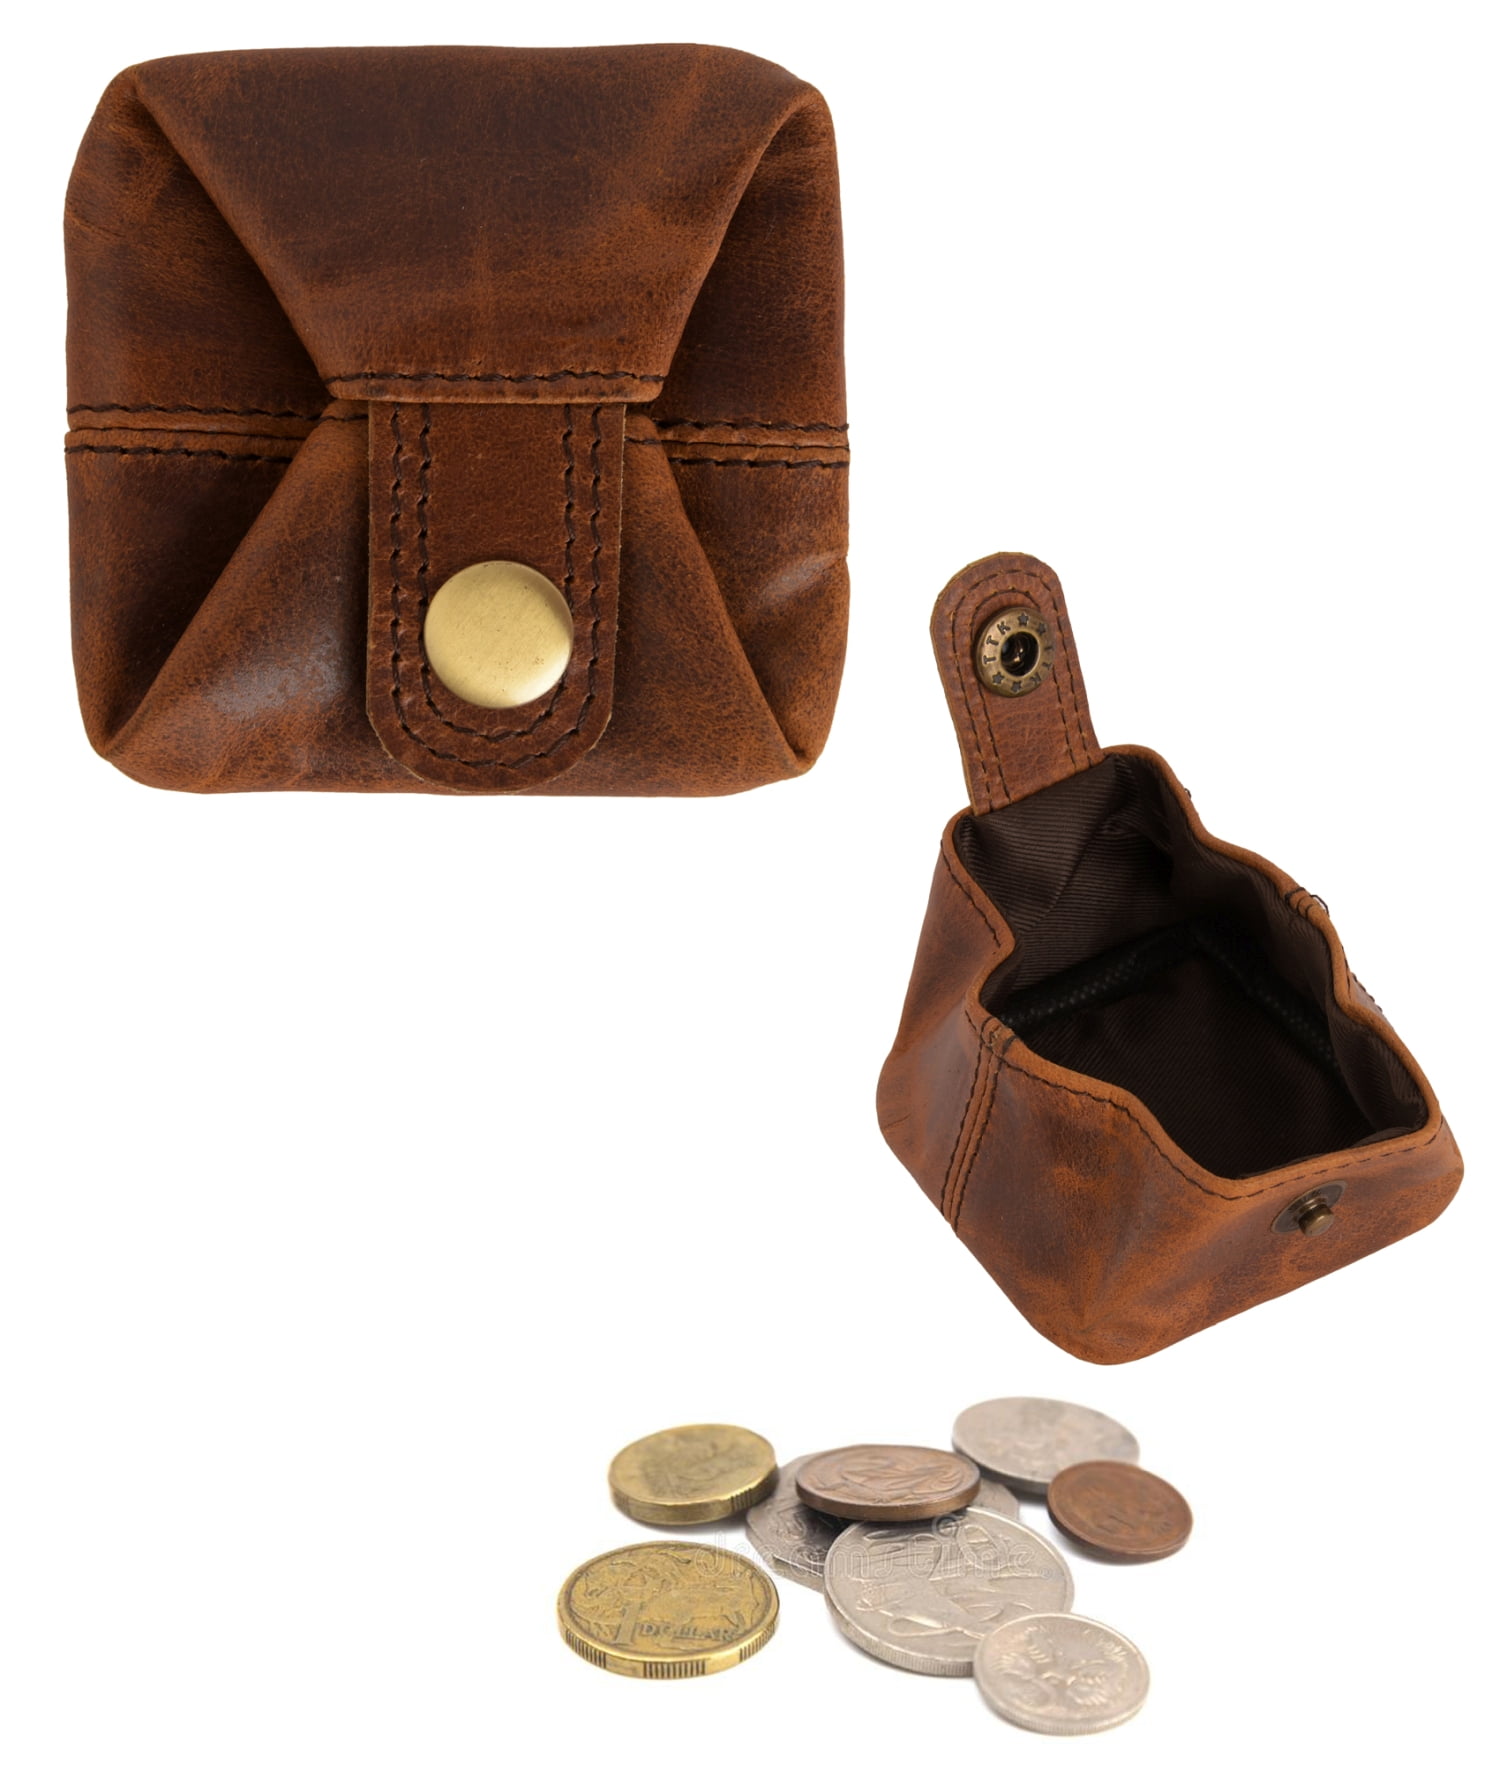  DORIS&JACKY Soft Lambskin Leather Coin Purse Small